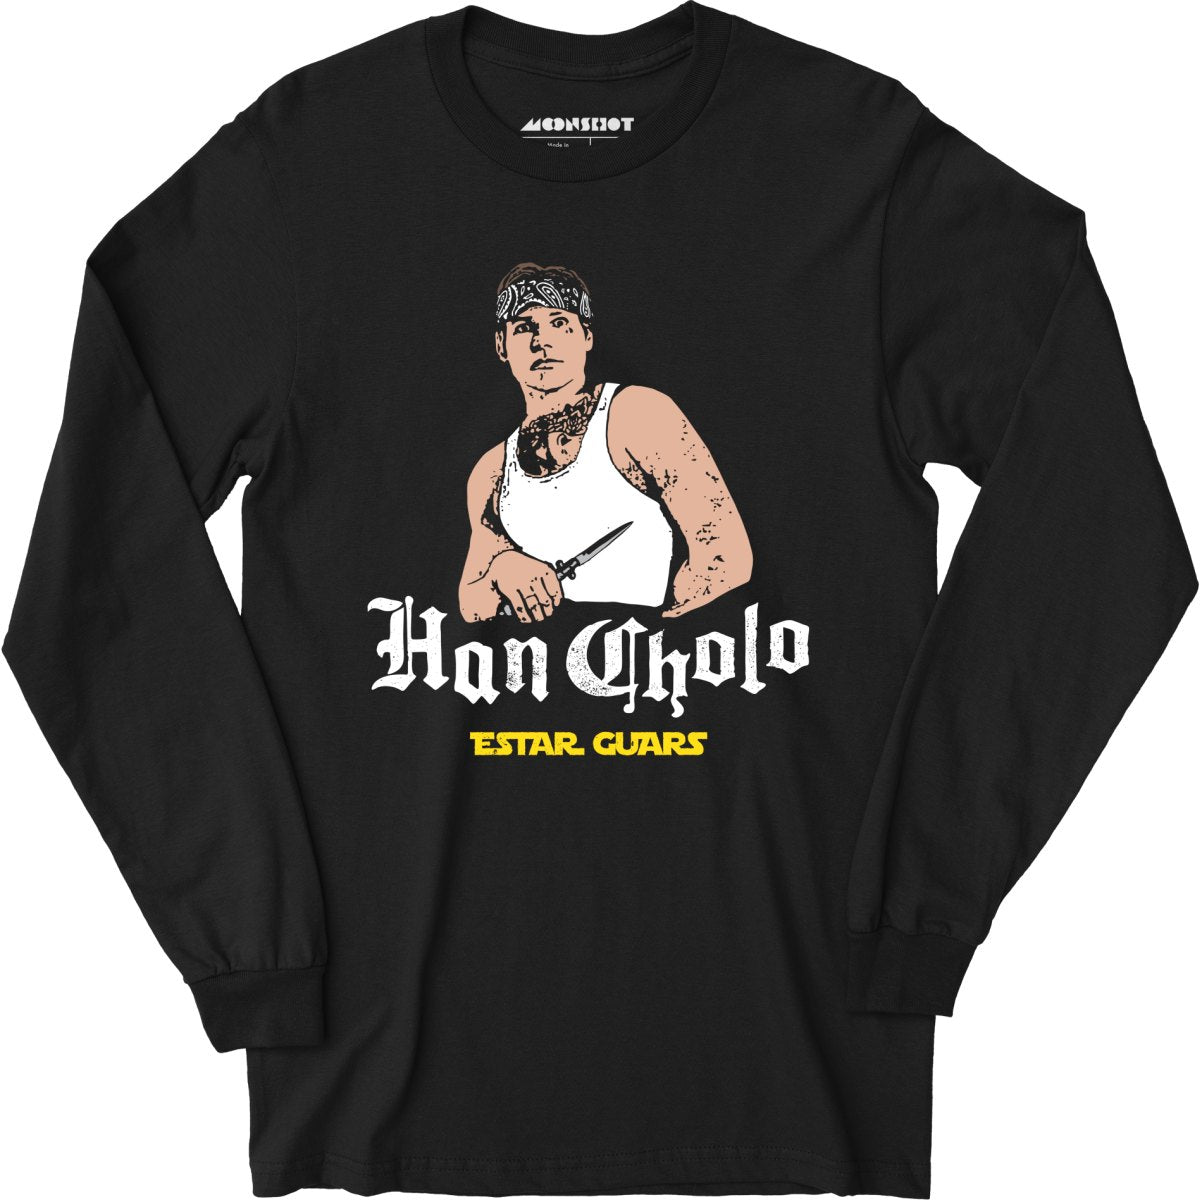 Han Cholo Estar Guars - Long Sleeve T-Shirt